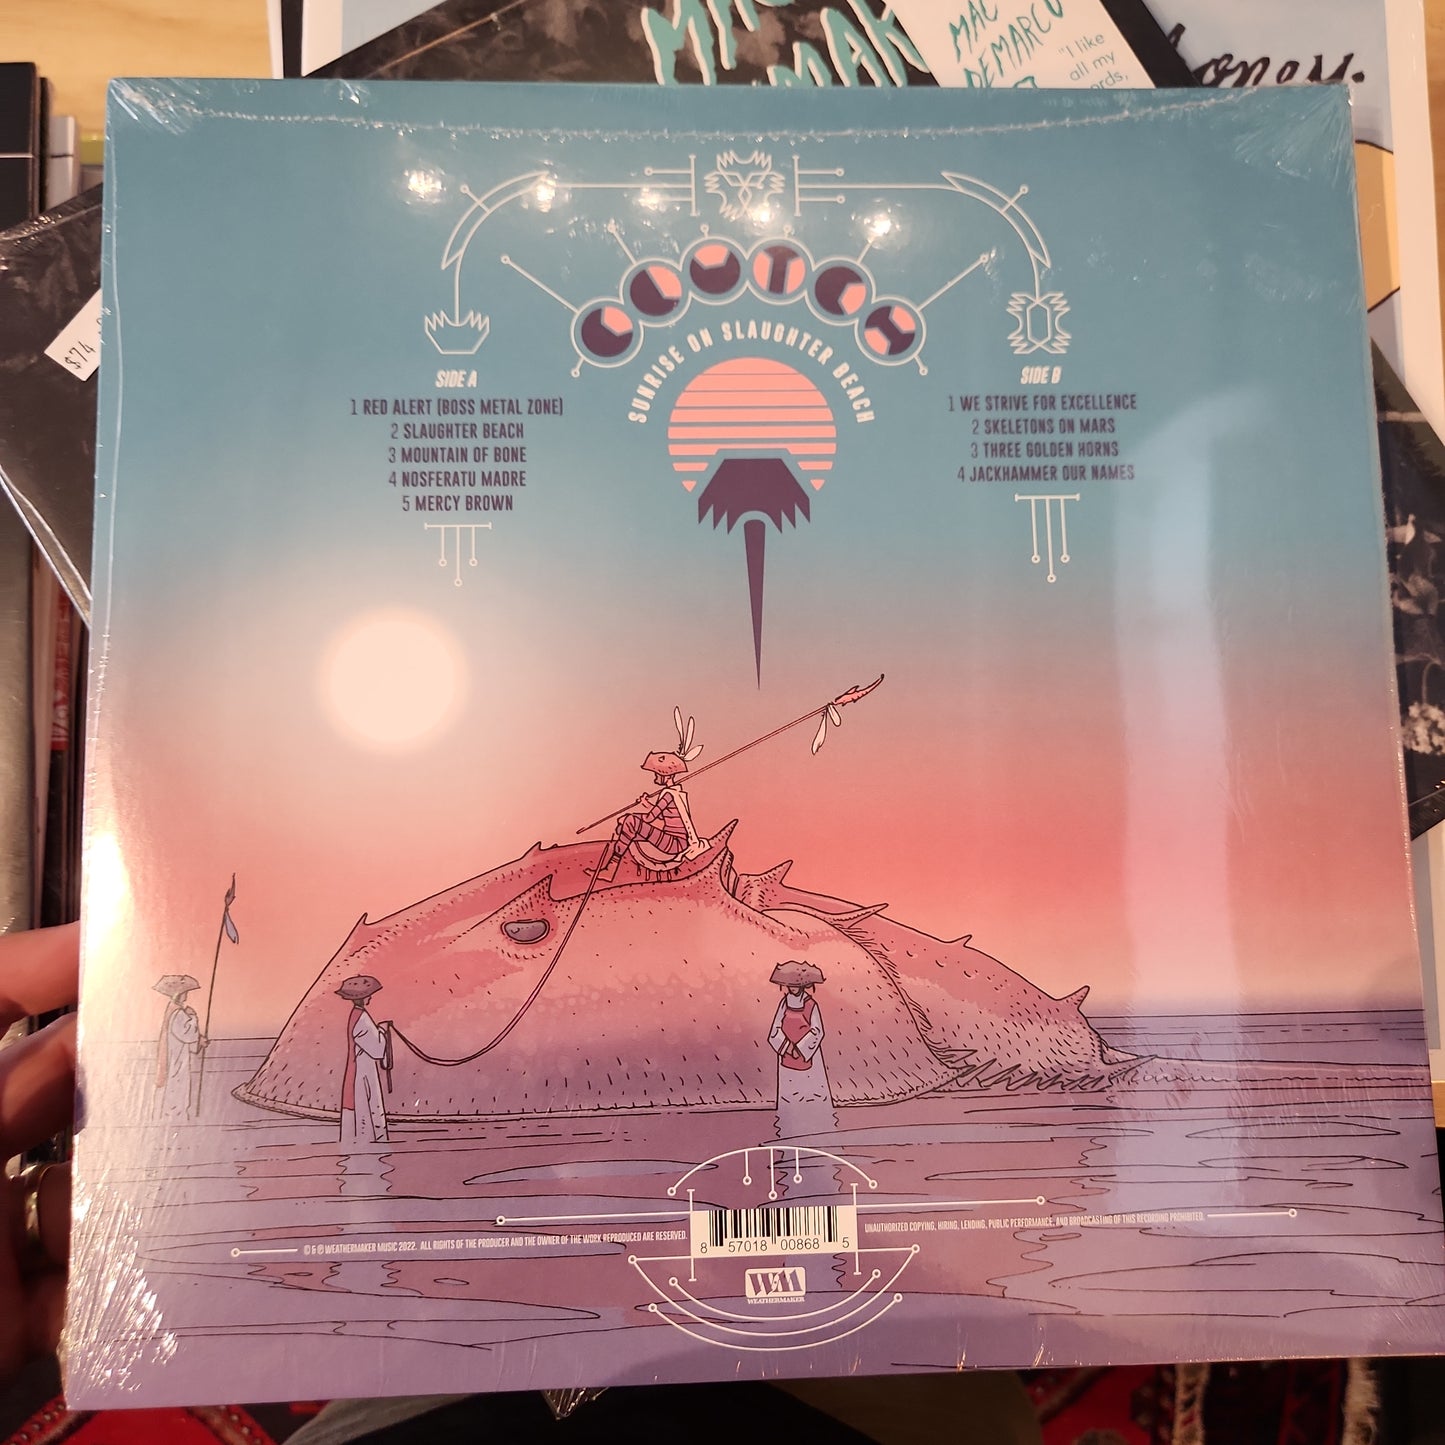 Clutch - Sunrise on Slaughter Beach - Vinyl LP